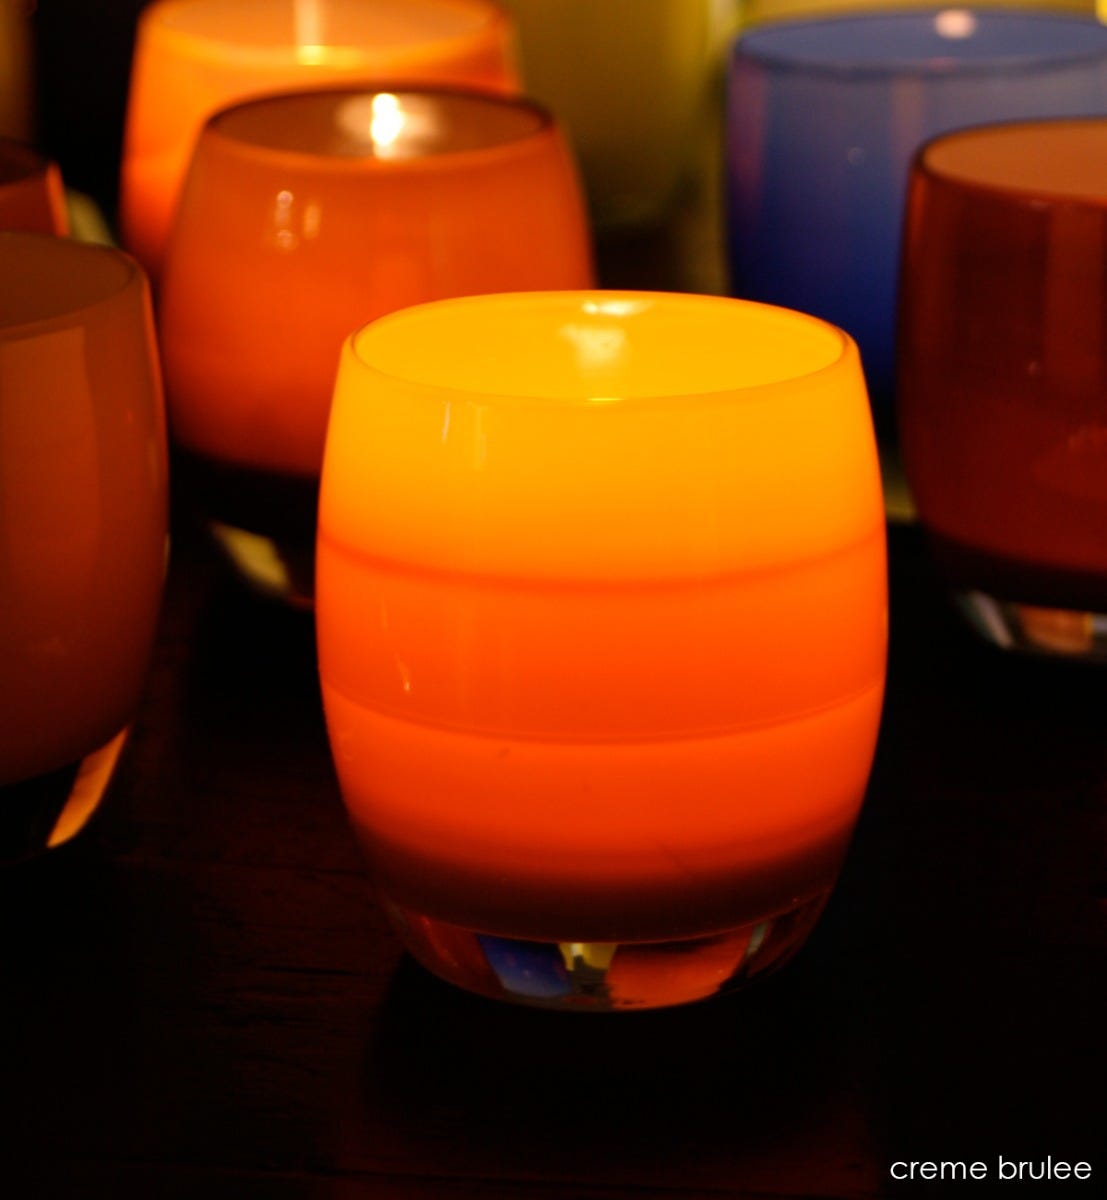  creme brûlée caramel, hand-blown glass votive candle holder